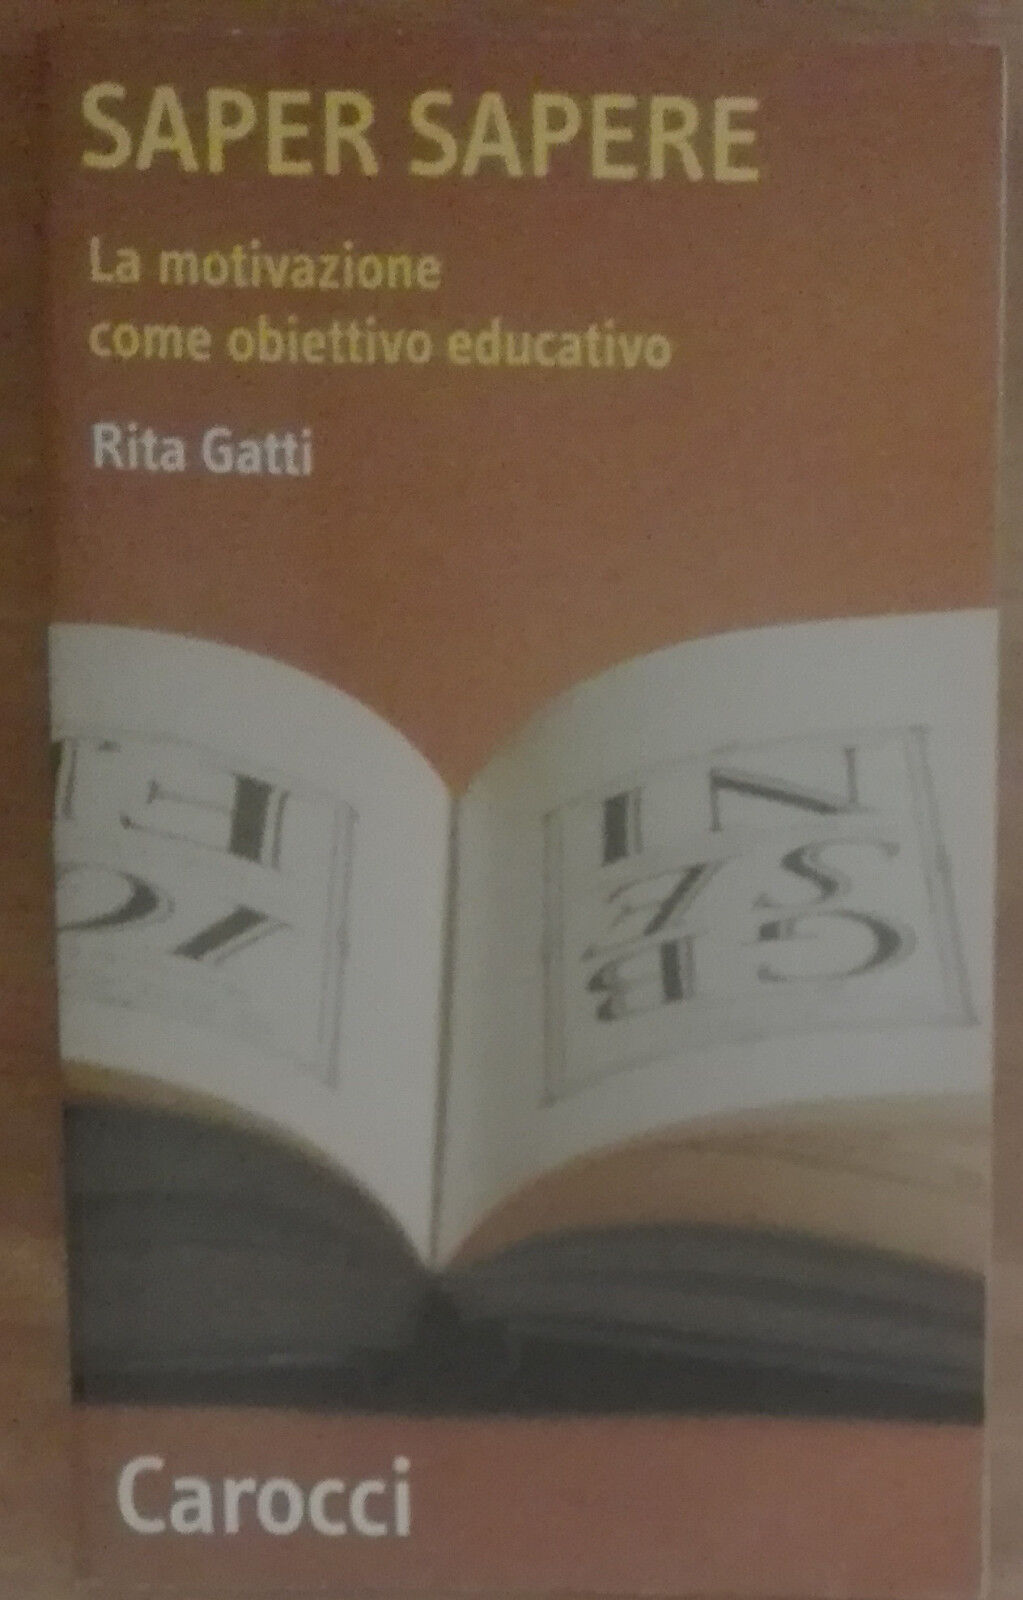 Saper sapere - Rita Gatti - Carocci,2002 - A